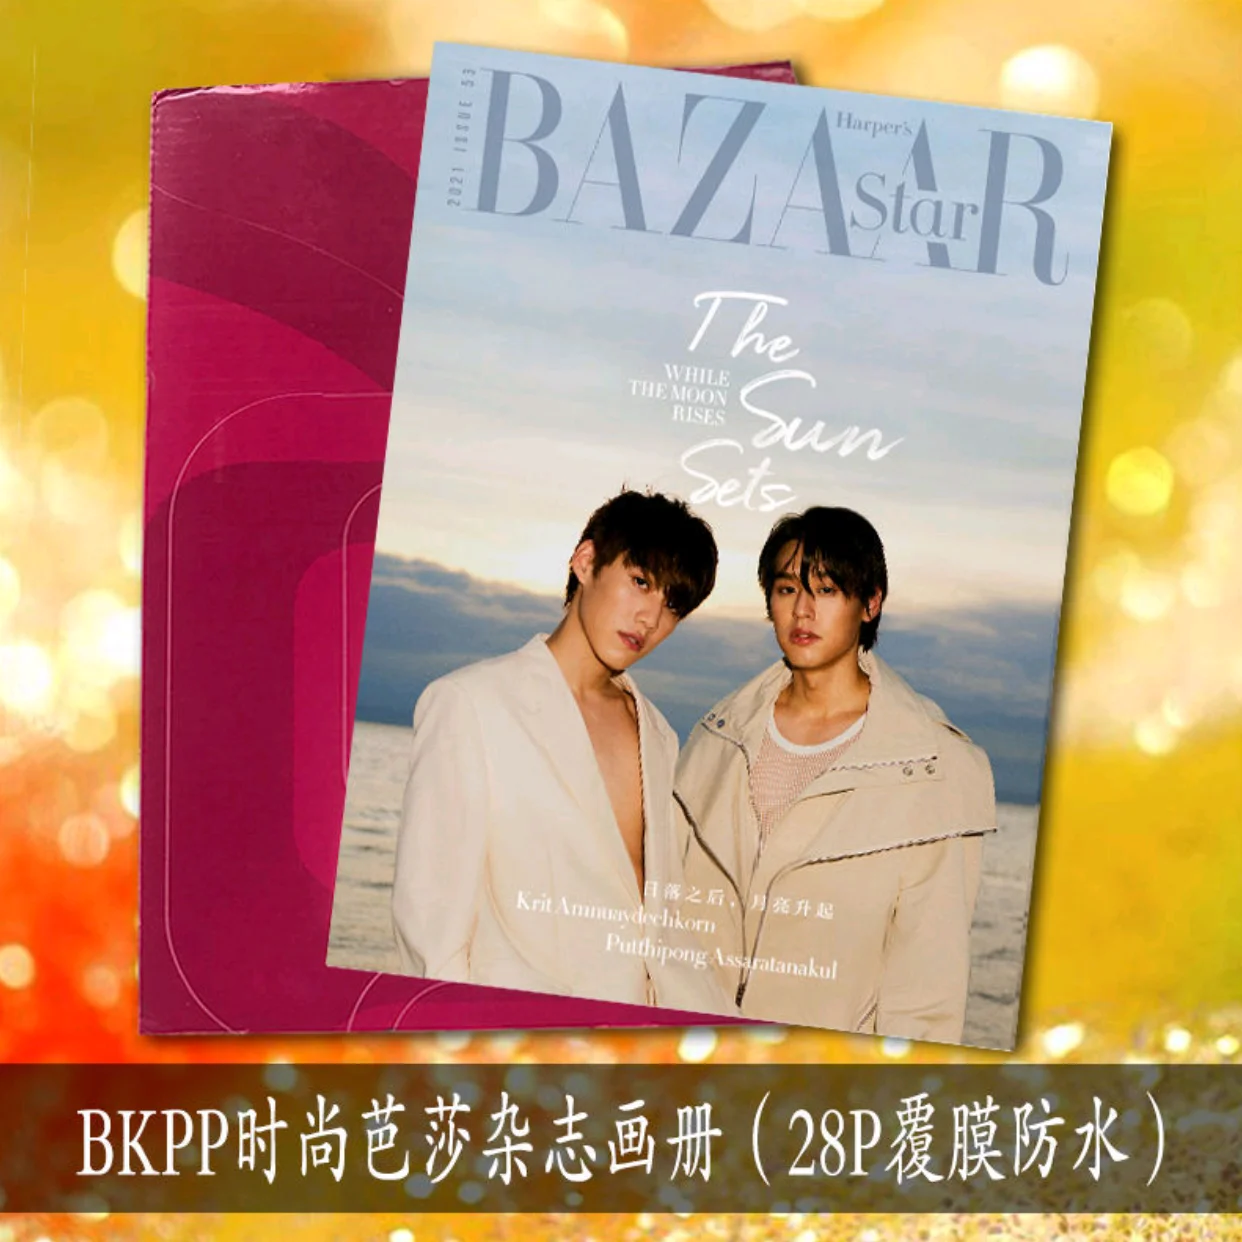 

BKPP fashion bazaar photo album ins record book magazine photo book photo book Thai drama interpret my love with your heart